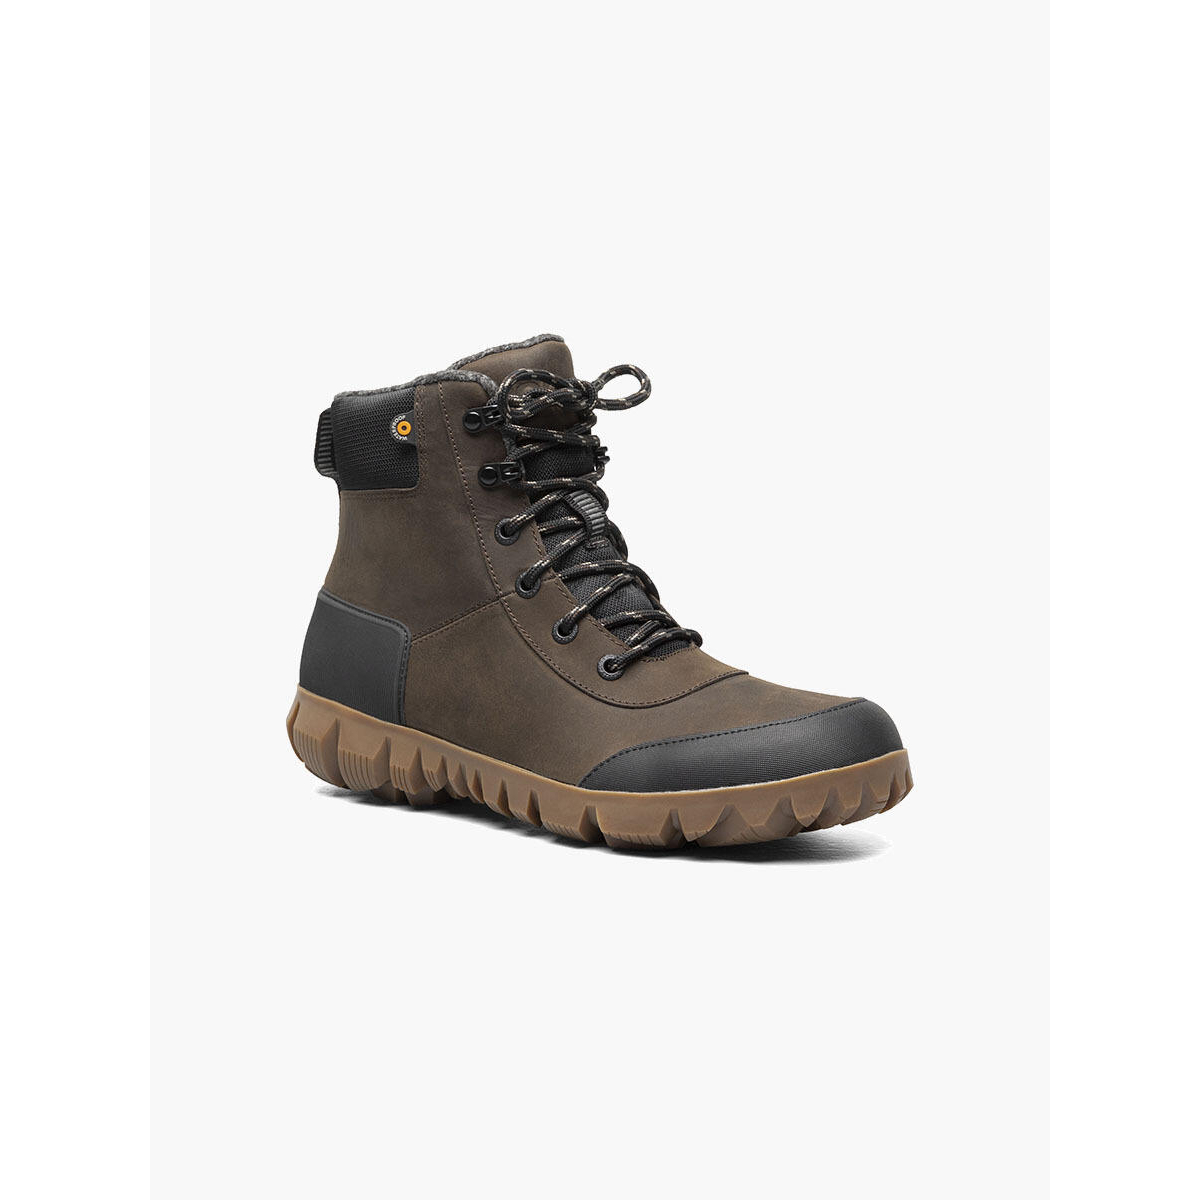 BOGS Men's Arcata Urban Leather Mid Winter Boots Chocolate - 72909-202 CHOCOLATE - CHOCOLATE, 8